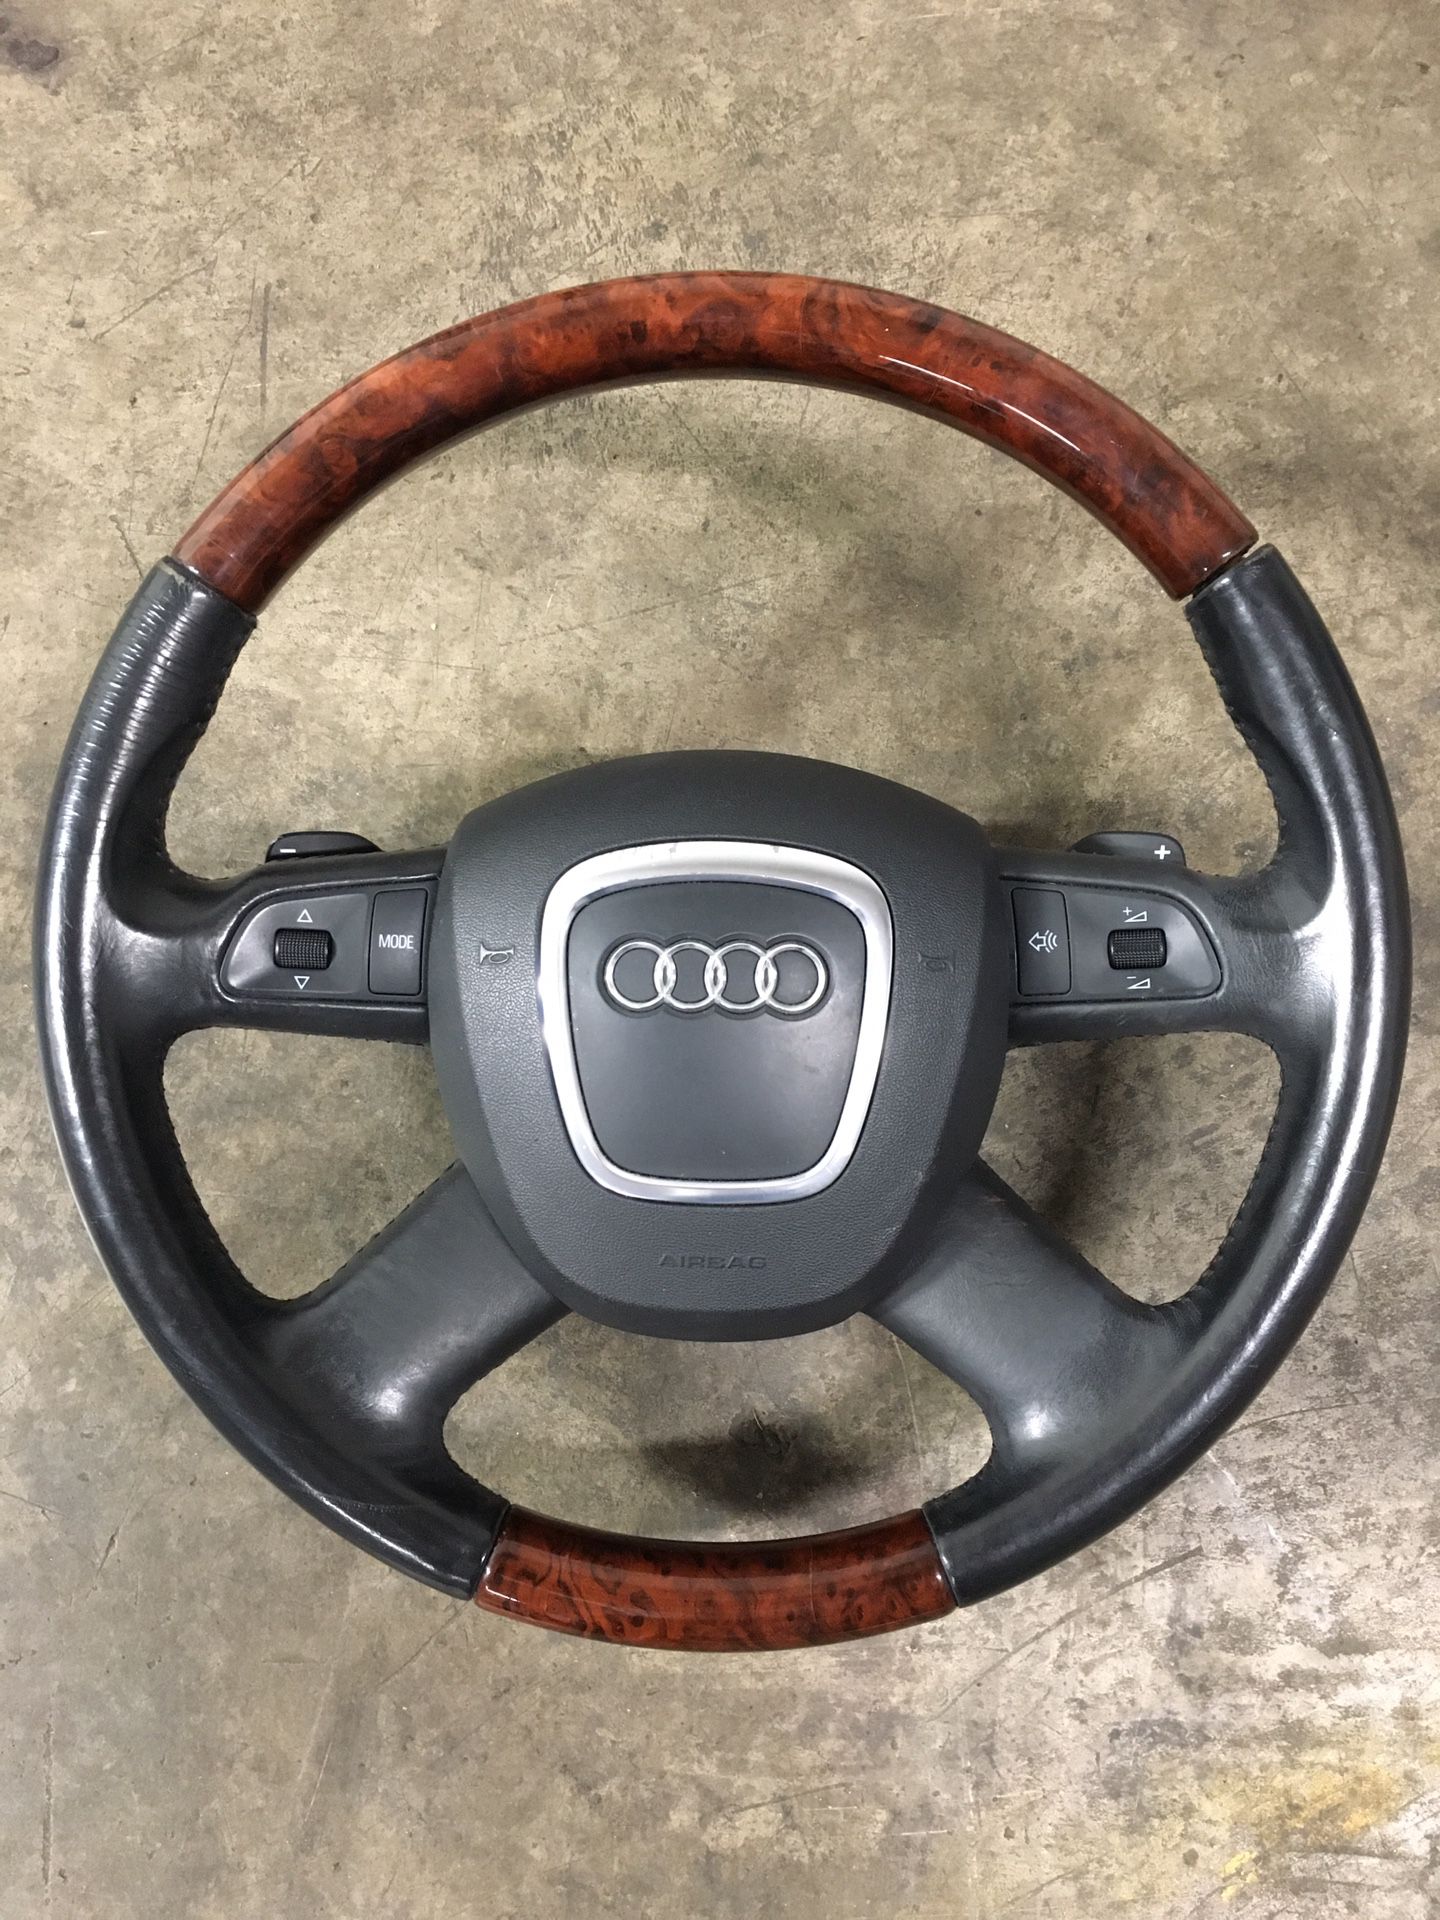 06 Audi A6 Steering wheel